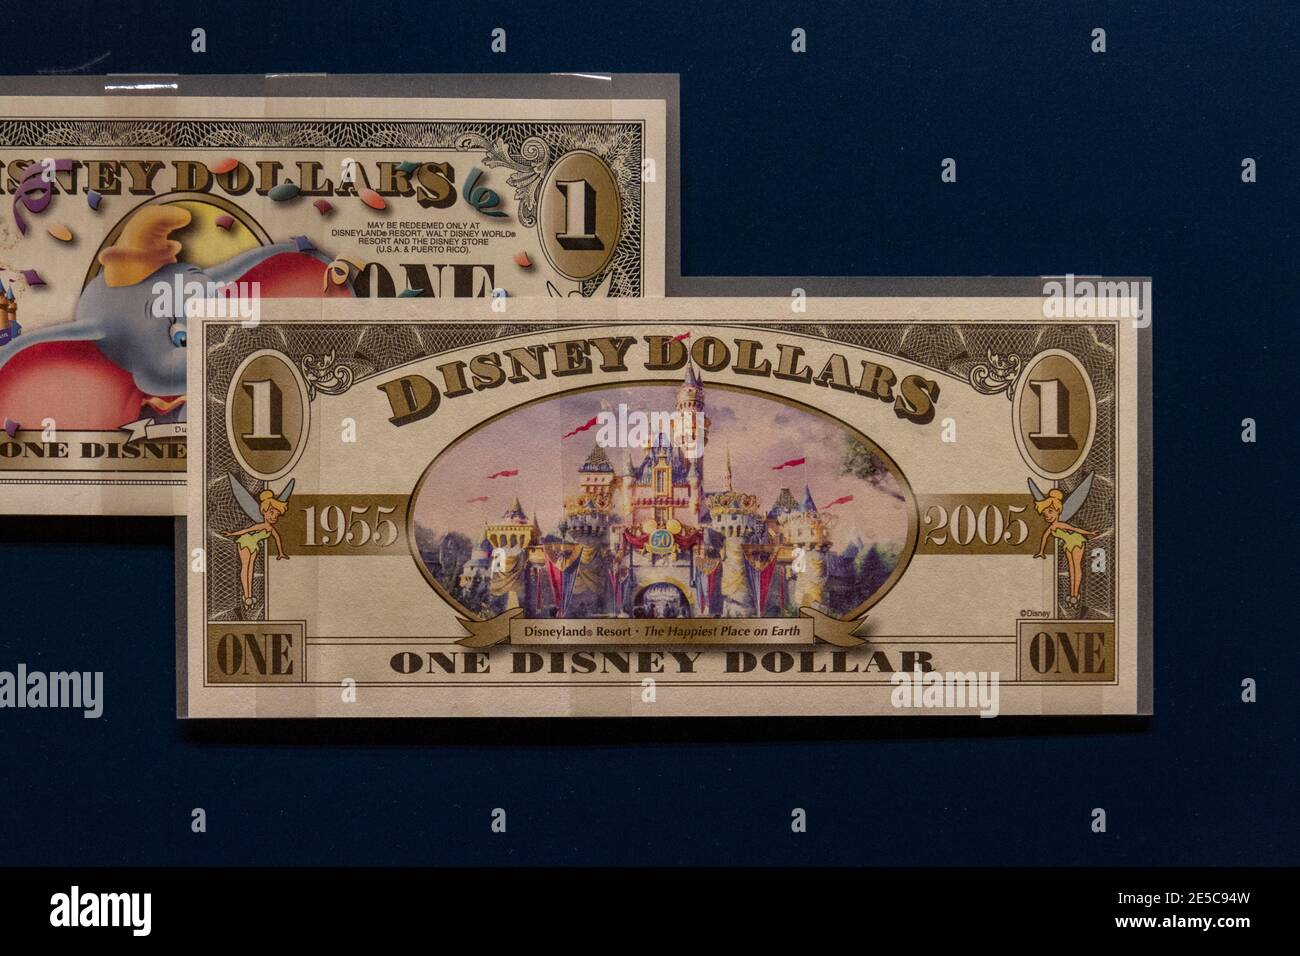 I heard we were sharing Disney Dollars. : r/papermoney